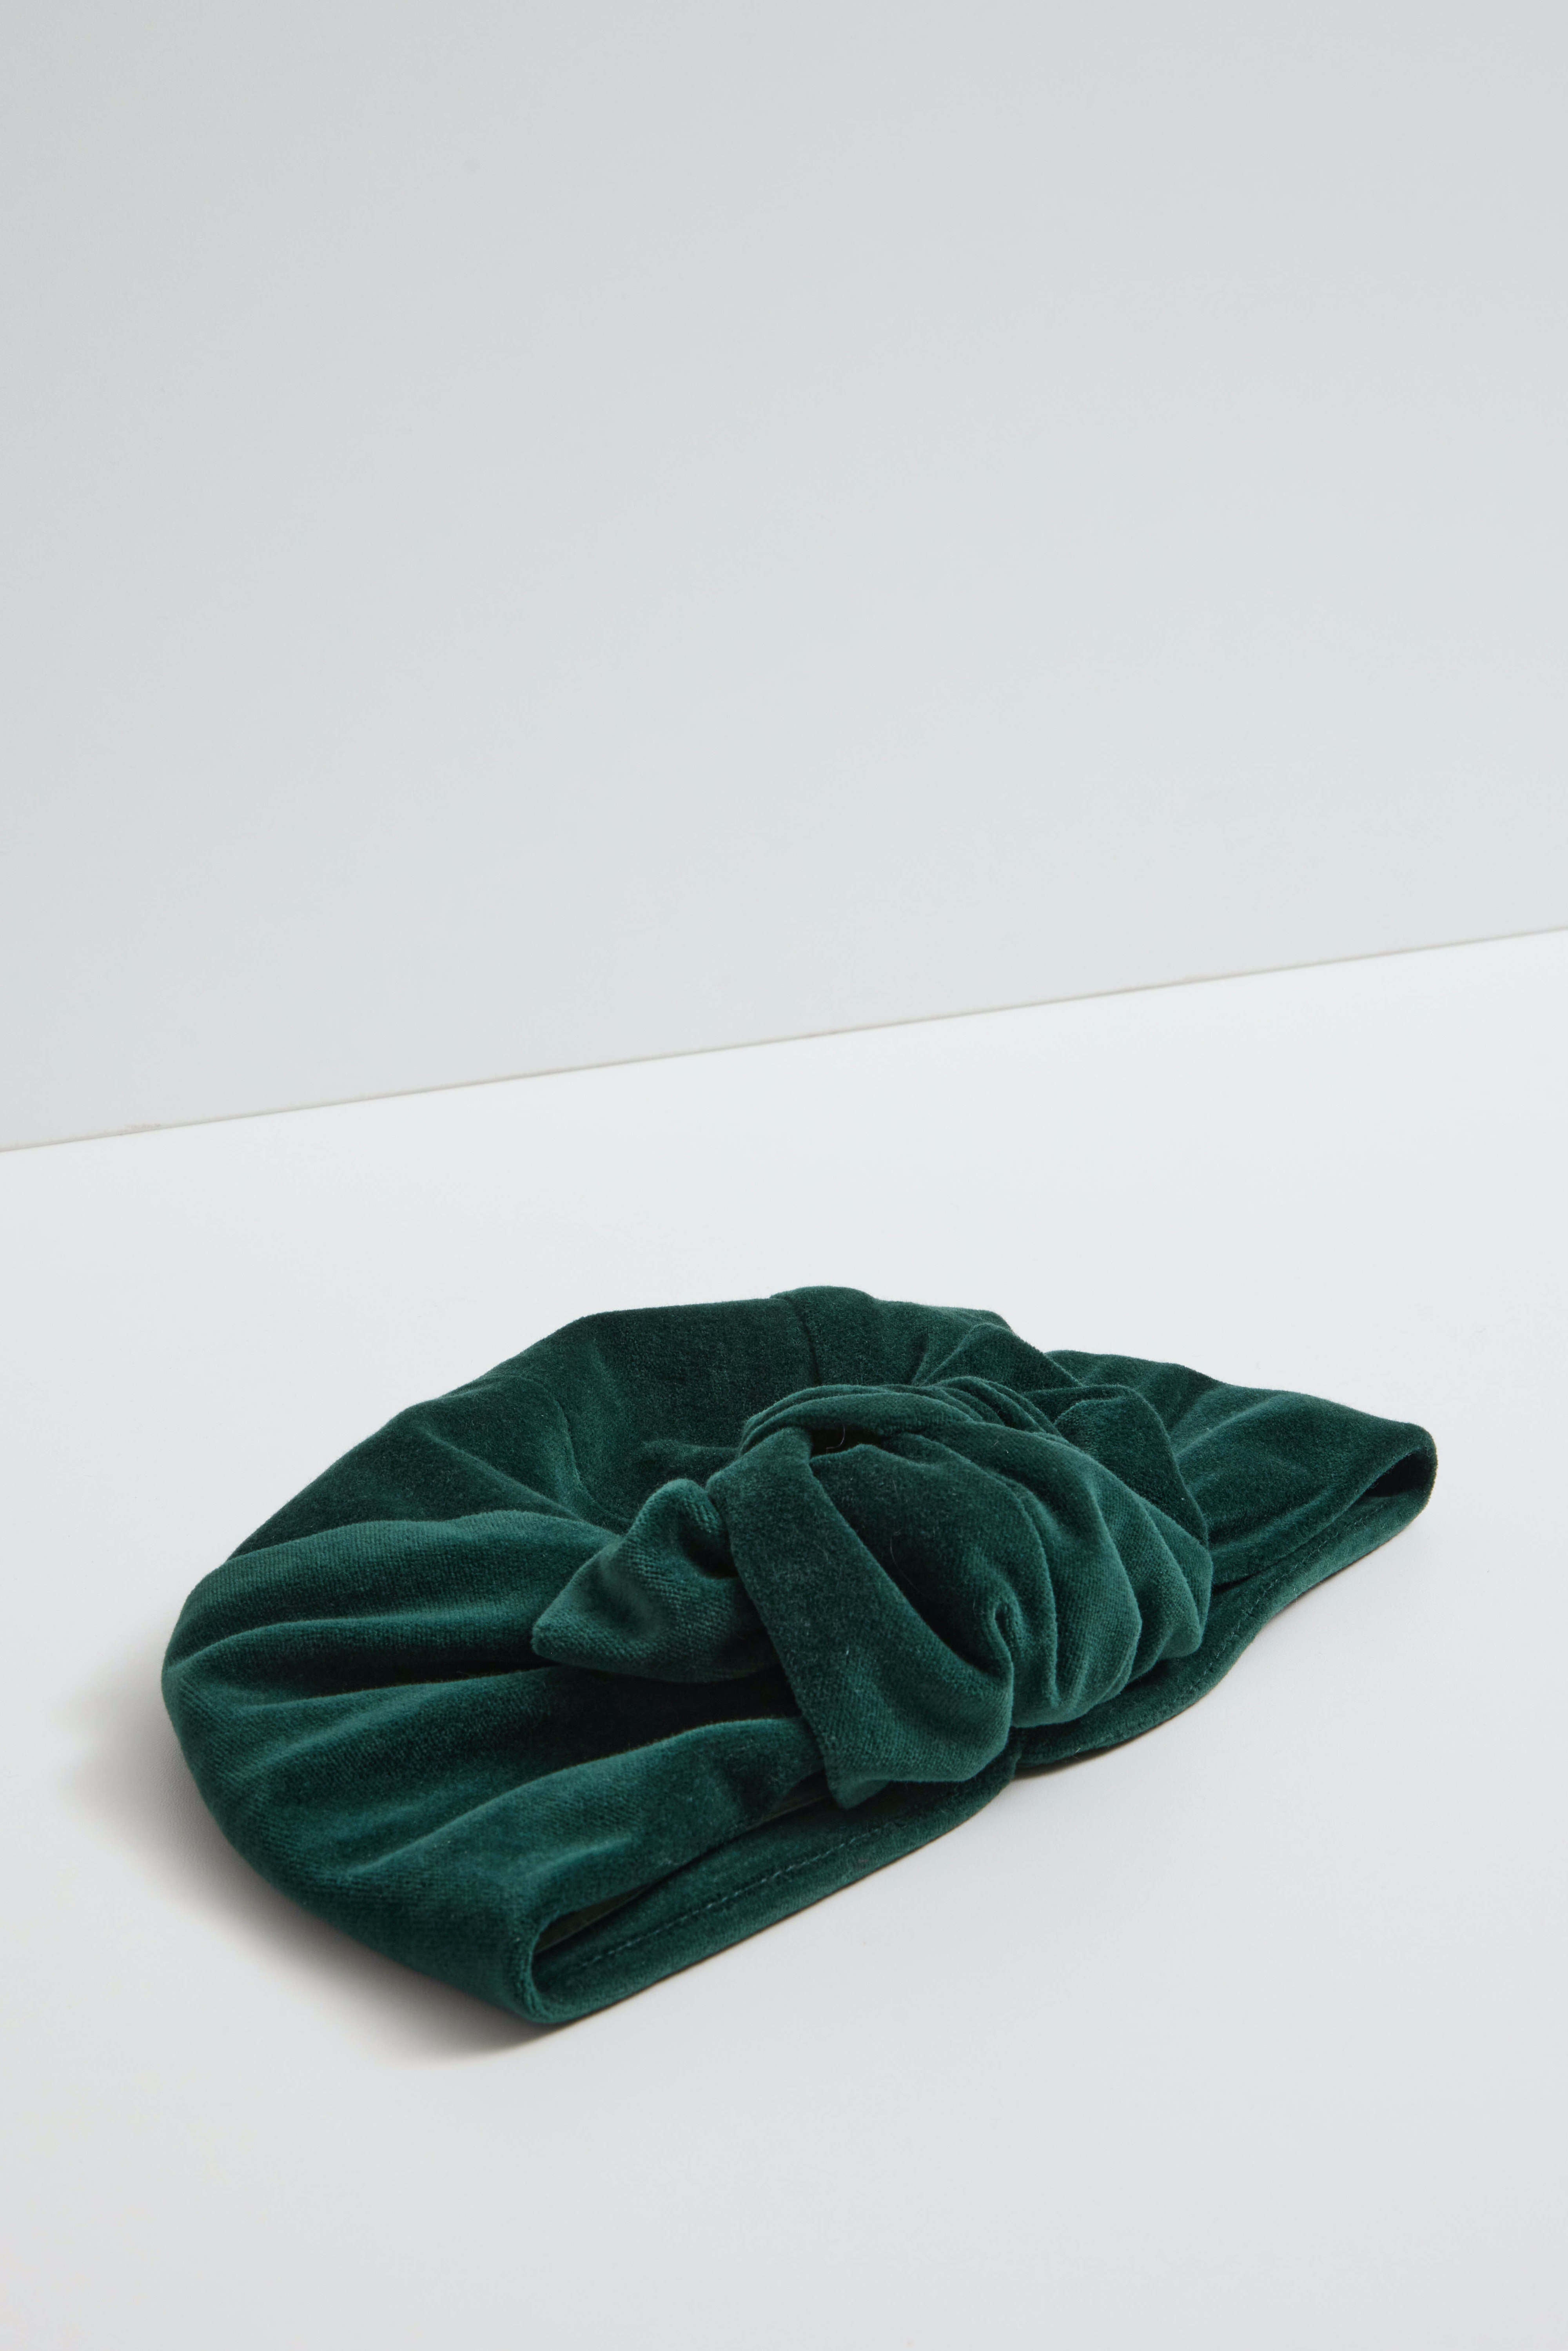 Parelli knotted turban hat - Jewel green velvet